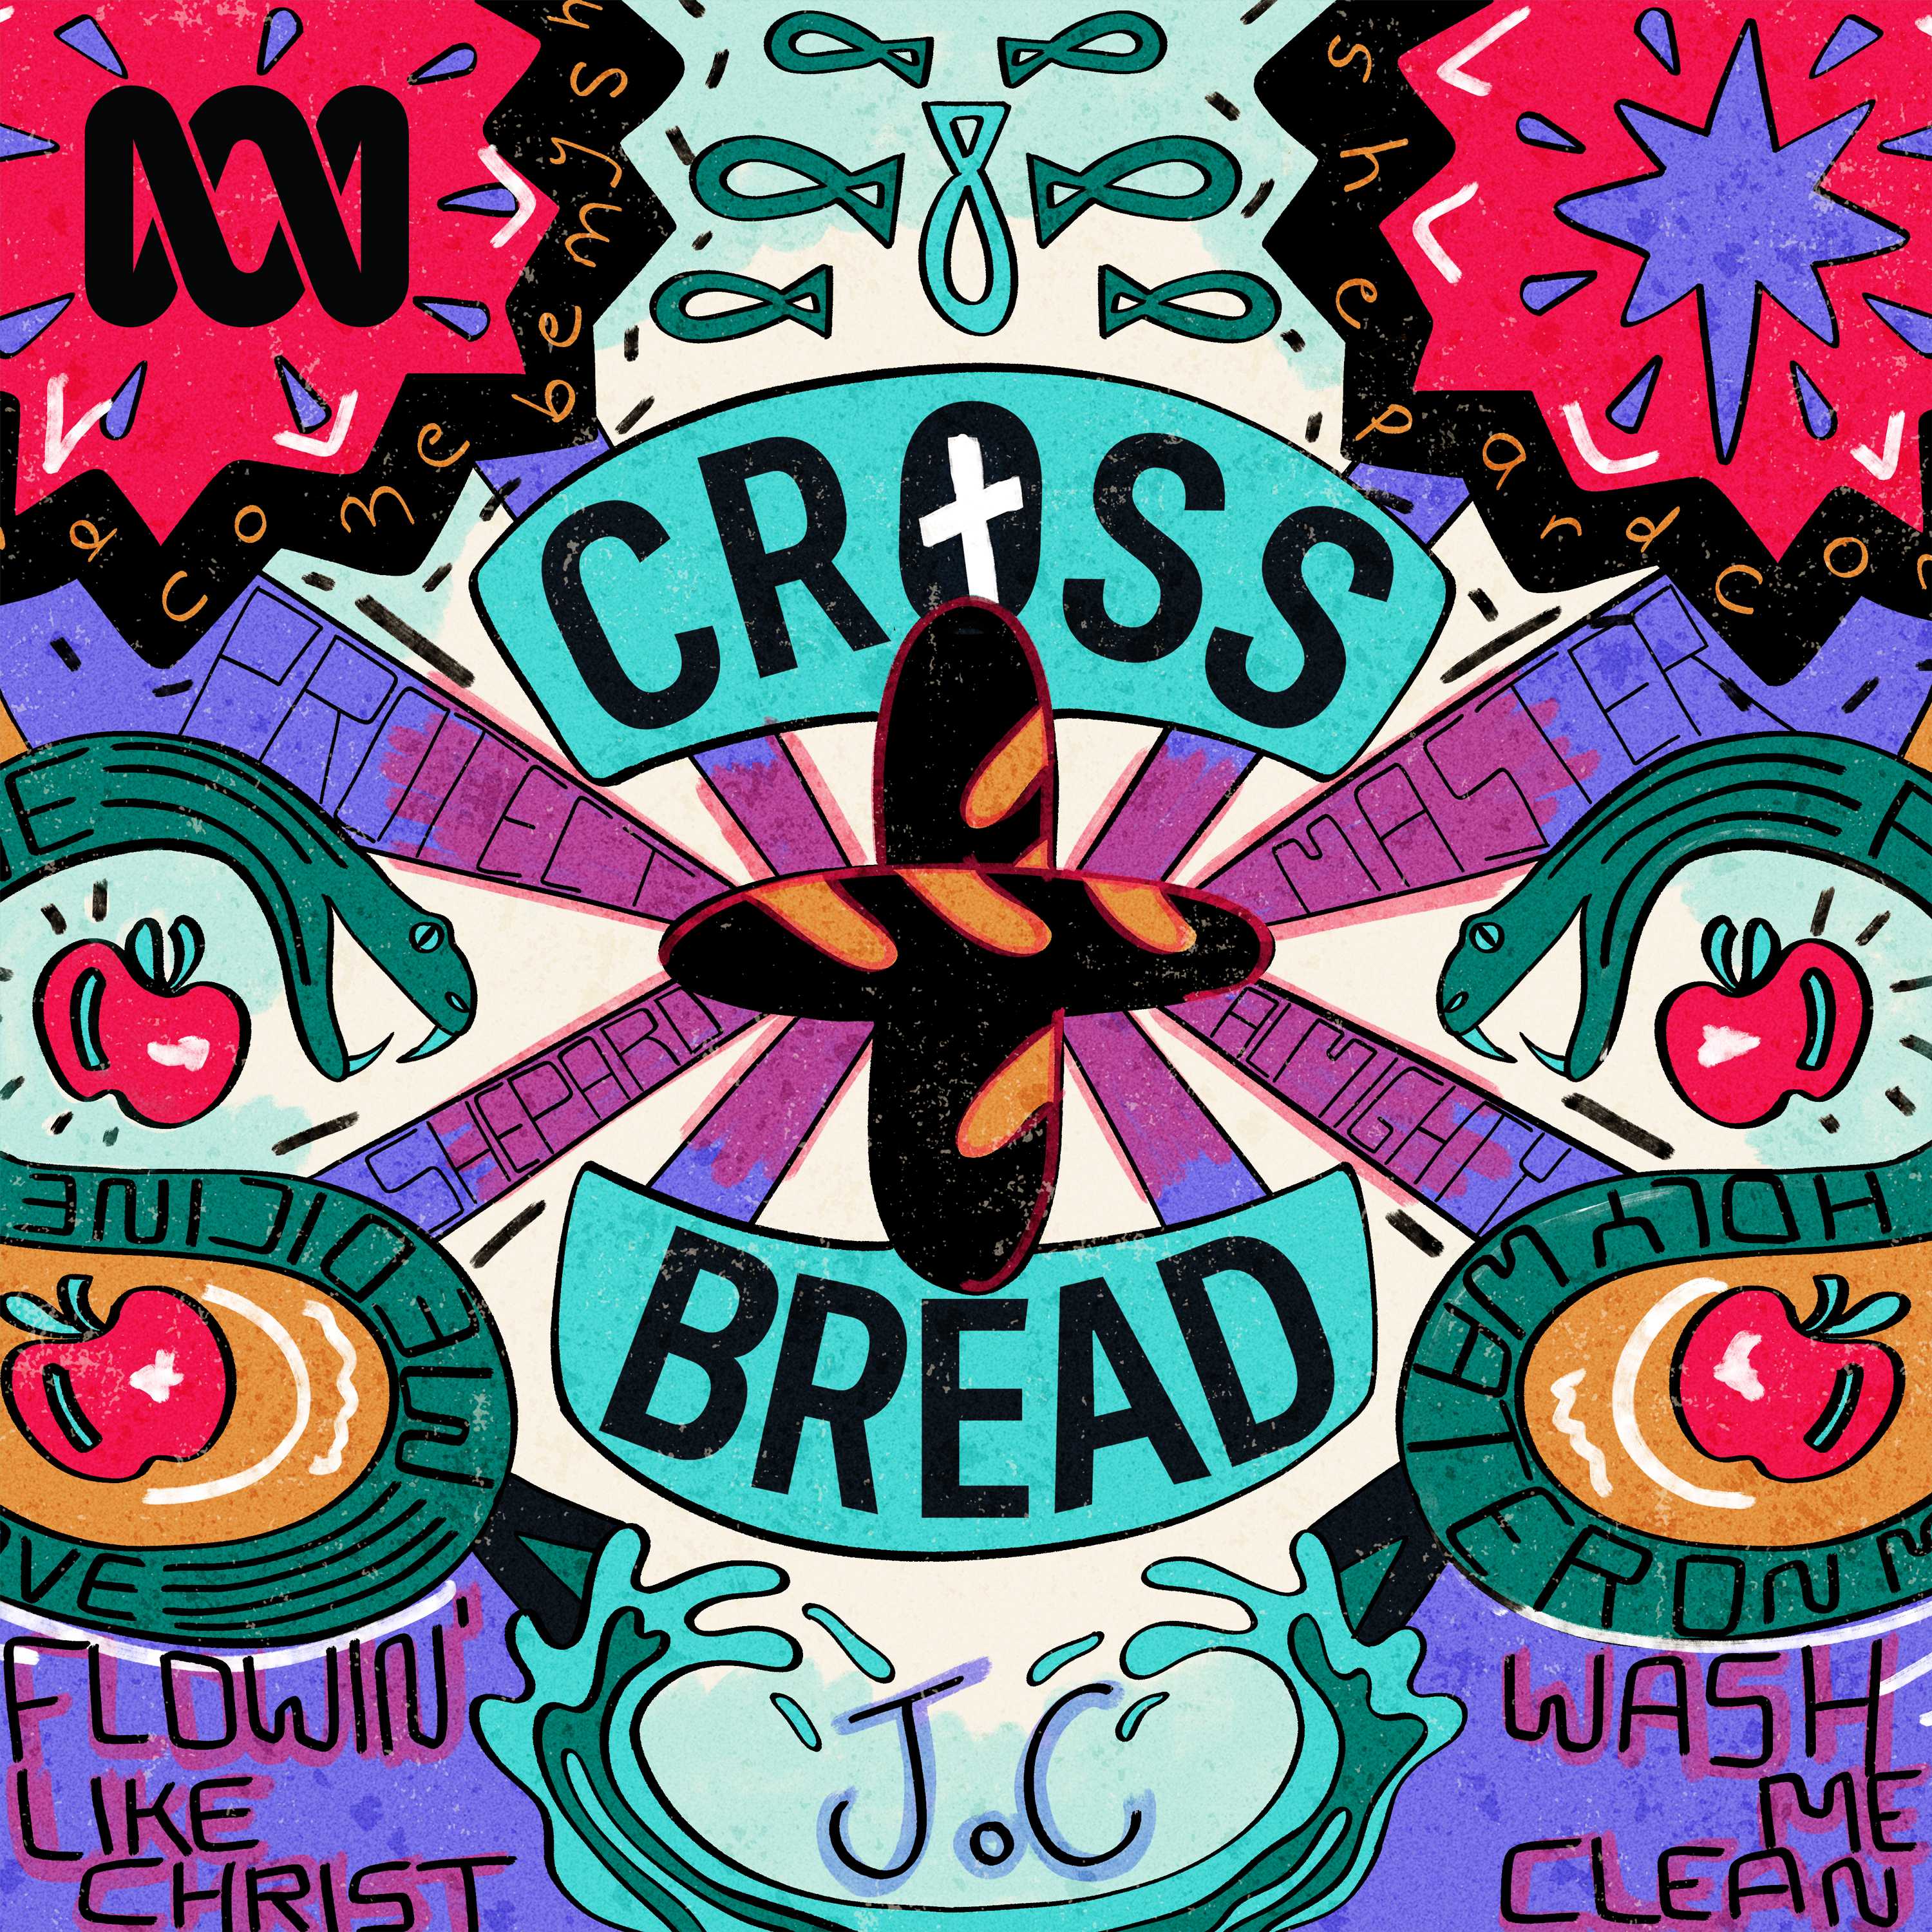 CrossBread — A Comedy Musical podcast show image